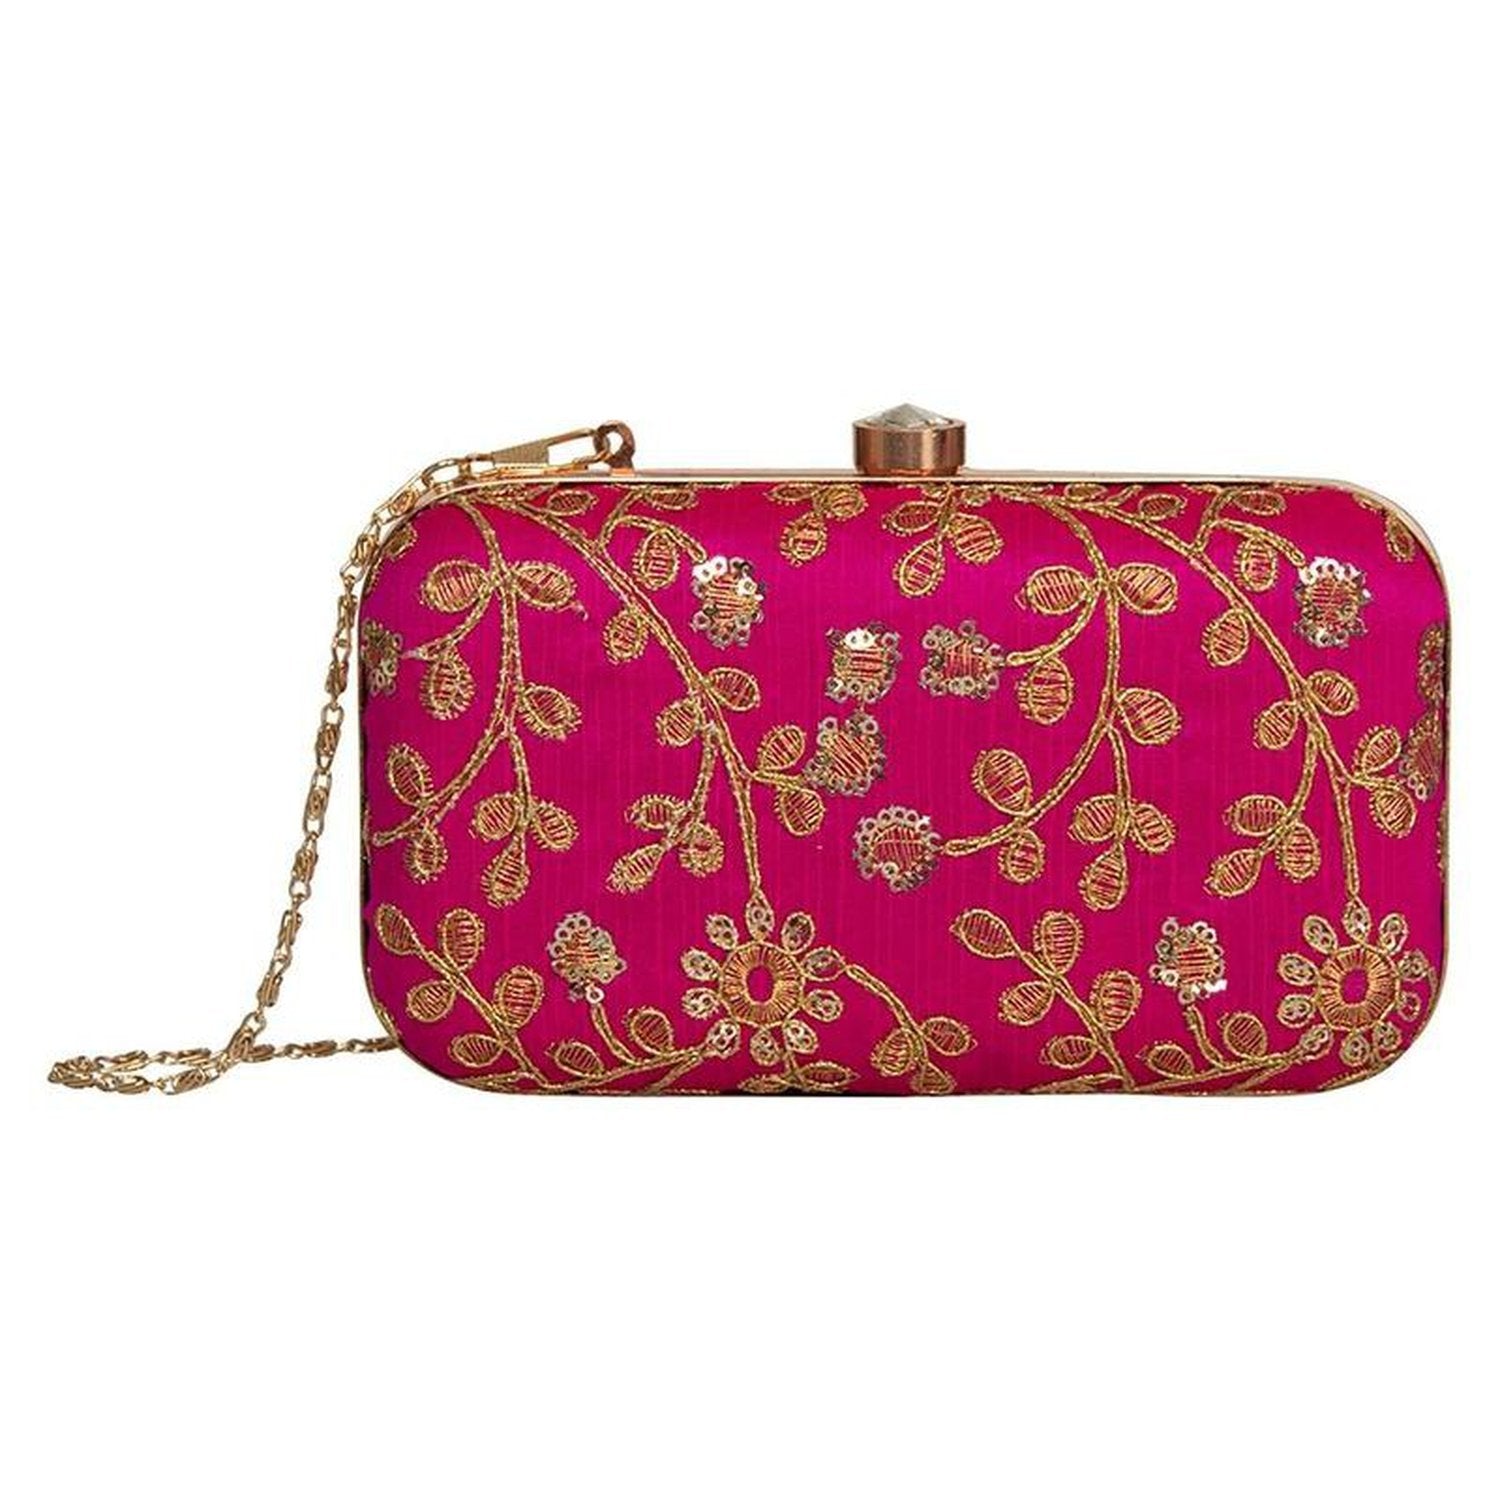 Orchid Pink Velvet Zipped Clutch, Vegan Leather Bag, Pink Evening Bag, Bridesmaids Gift, Versatile Handbag, Wrist Cross Body Clutch